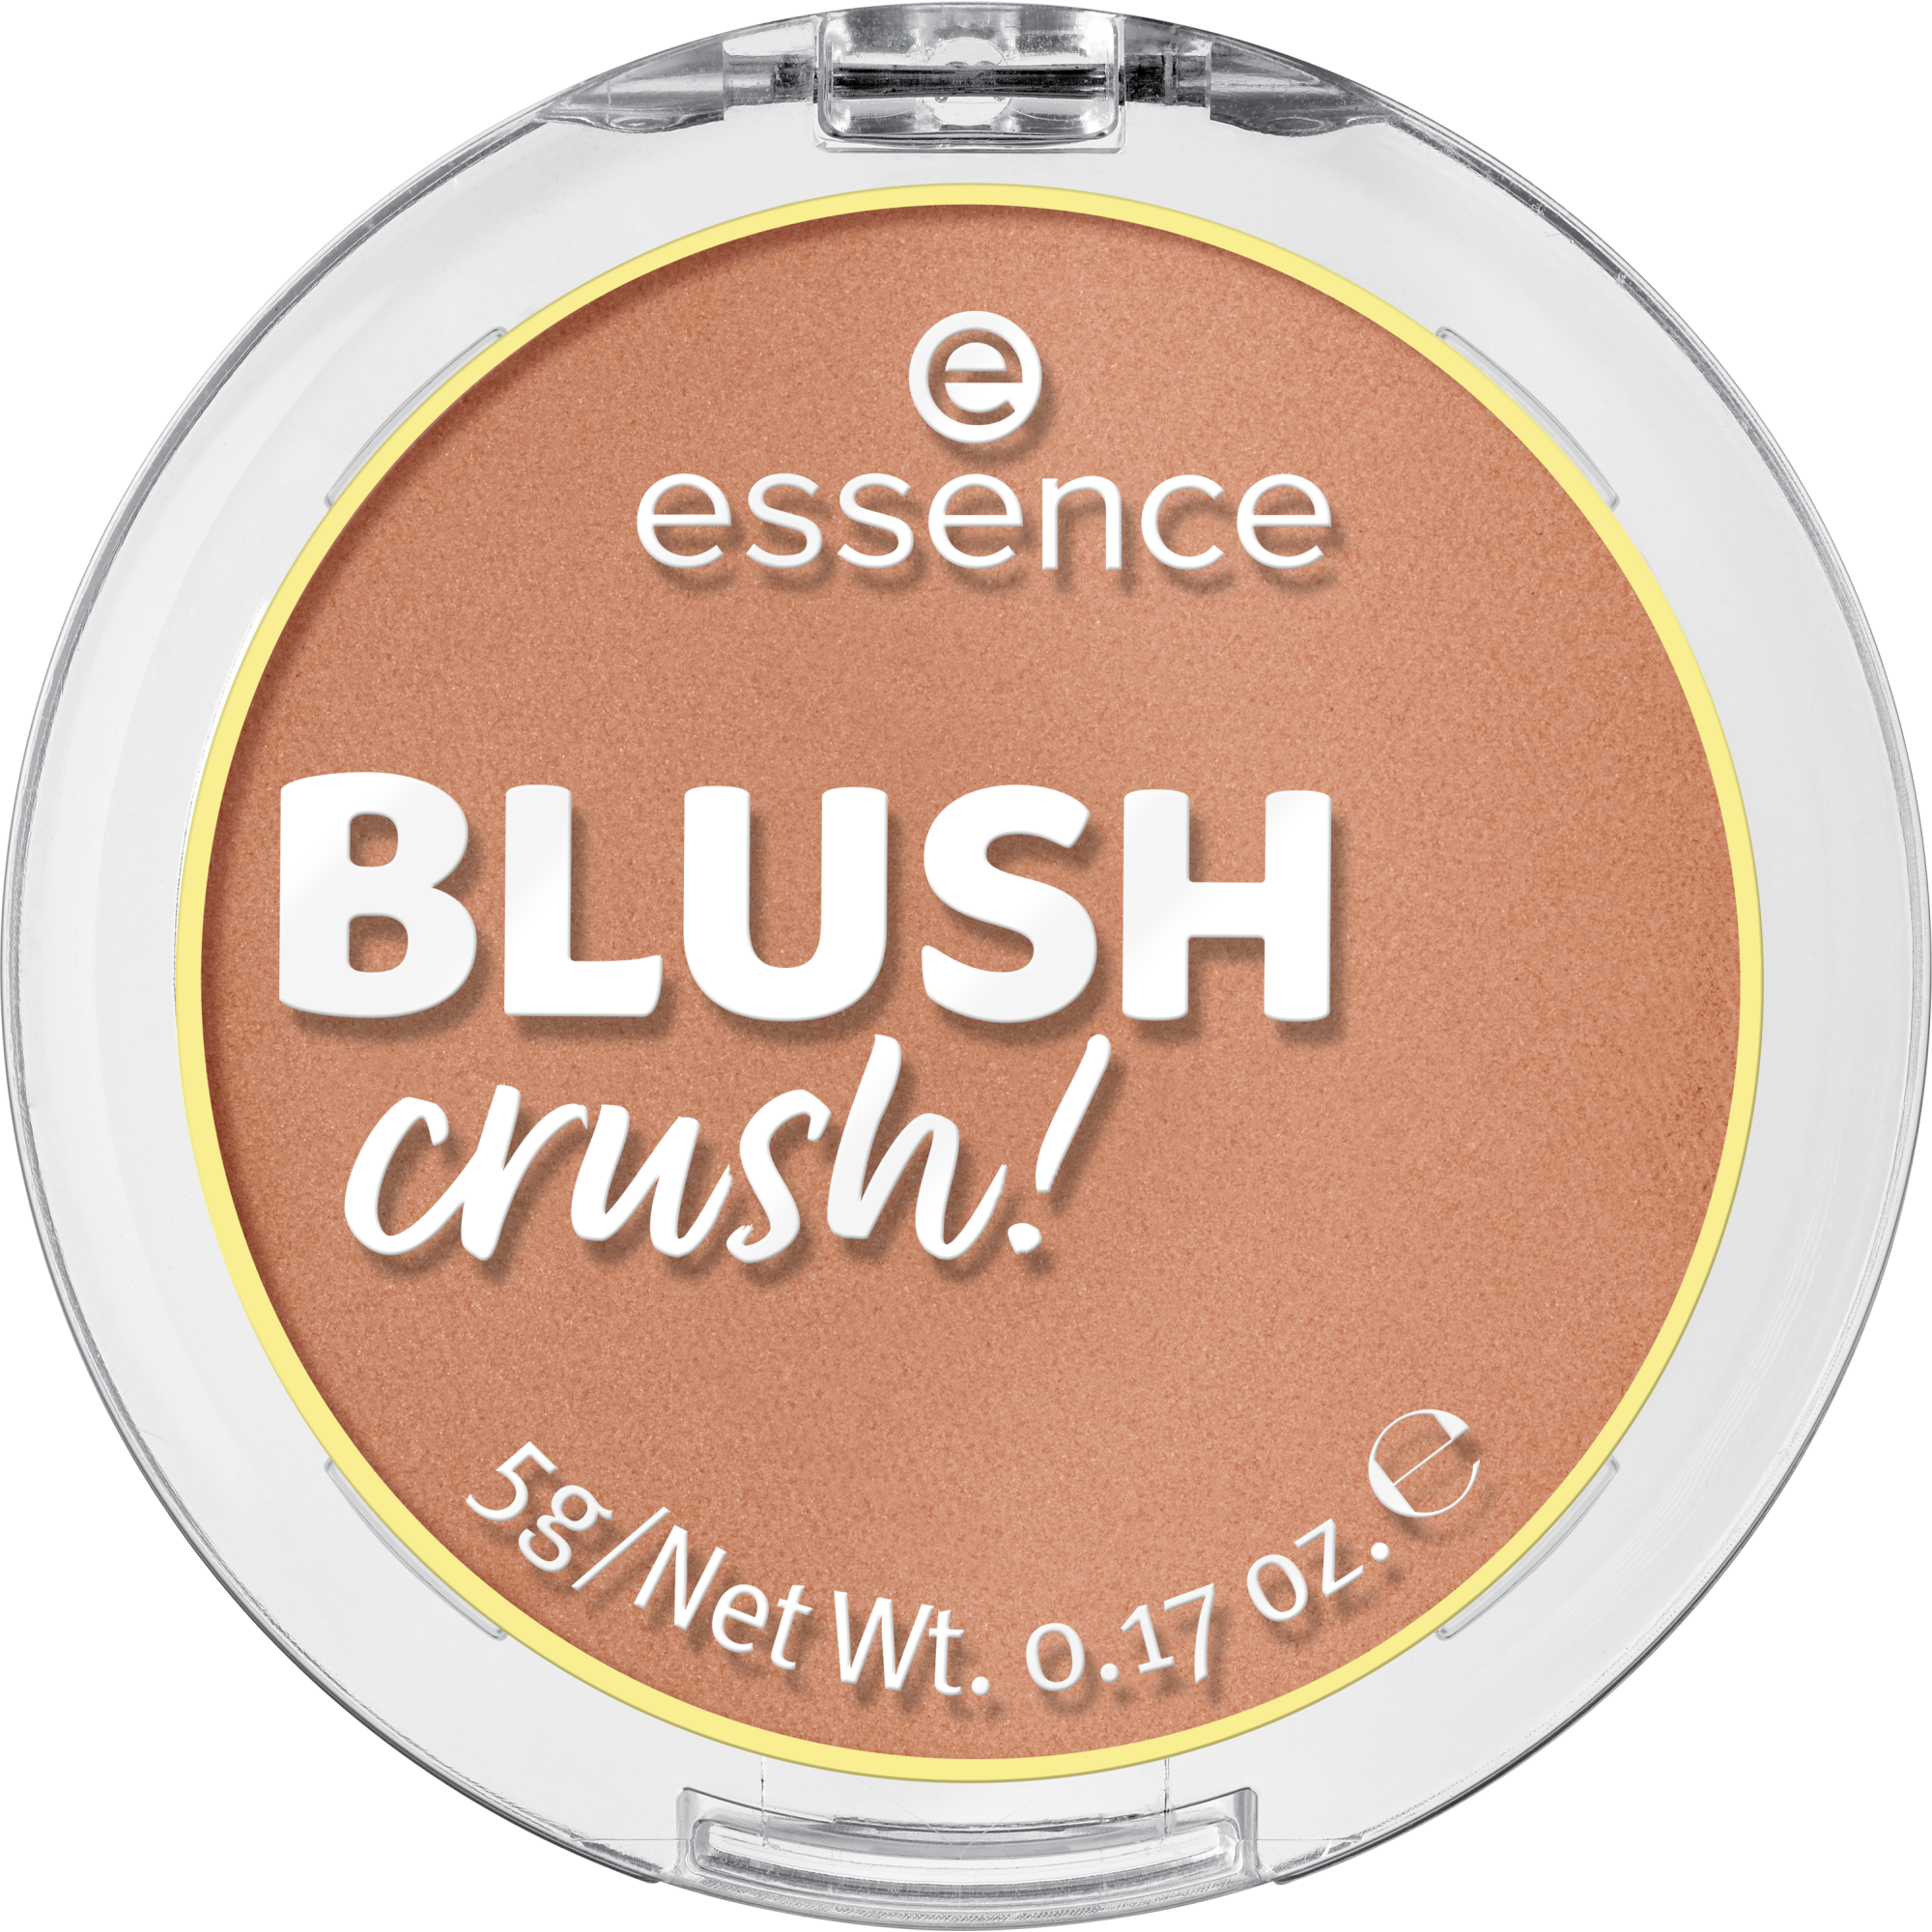 BLUSH crush! rumenilo